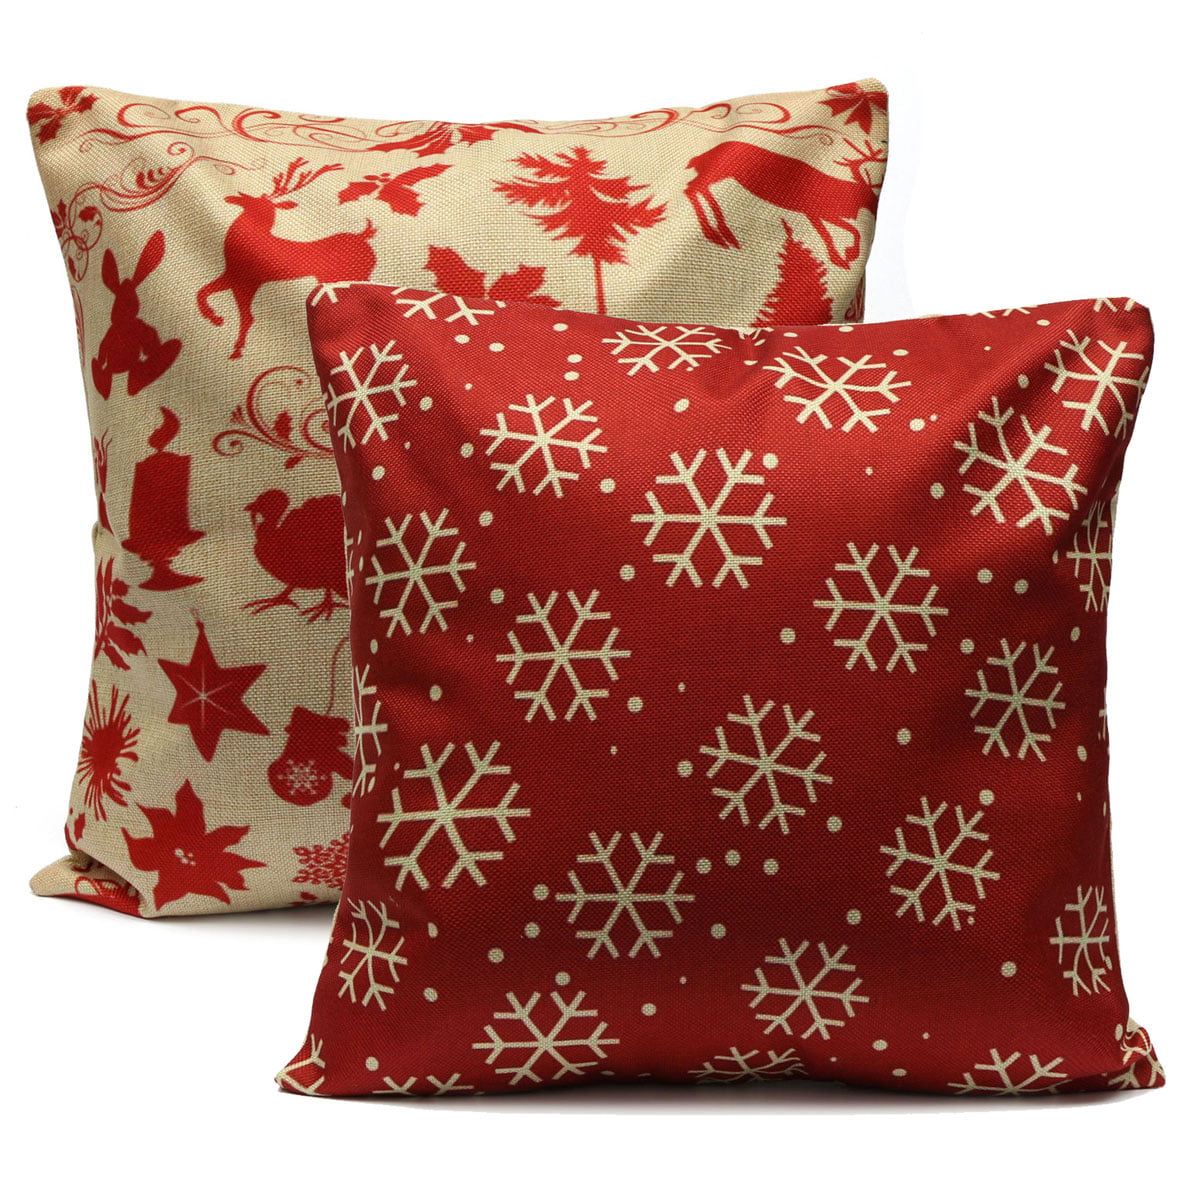 18“20“”Merry Christmas Pillow Case Sofa Car Throw Cushion Covers Home Room Decor